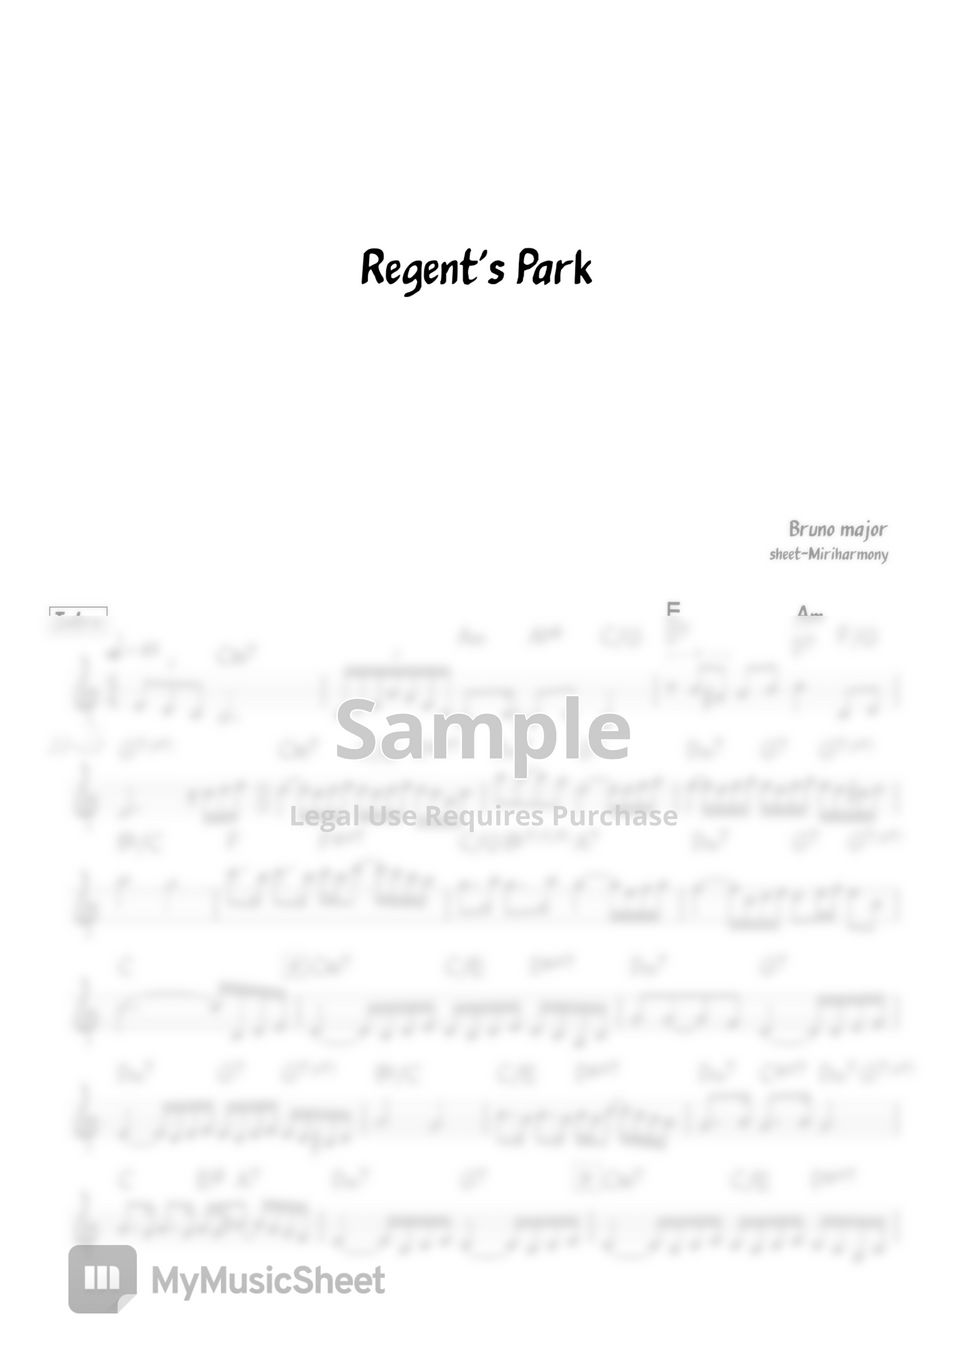 Bruno major - Regent's Park (C key , Db Key) by Miriharmony